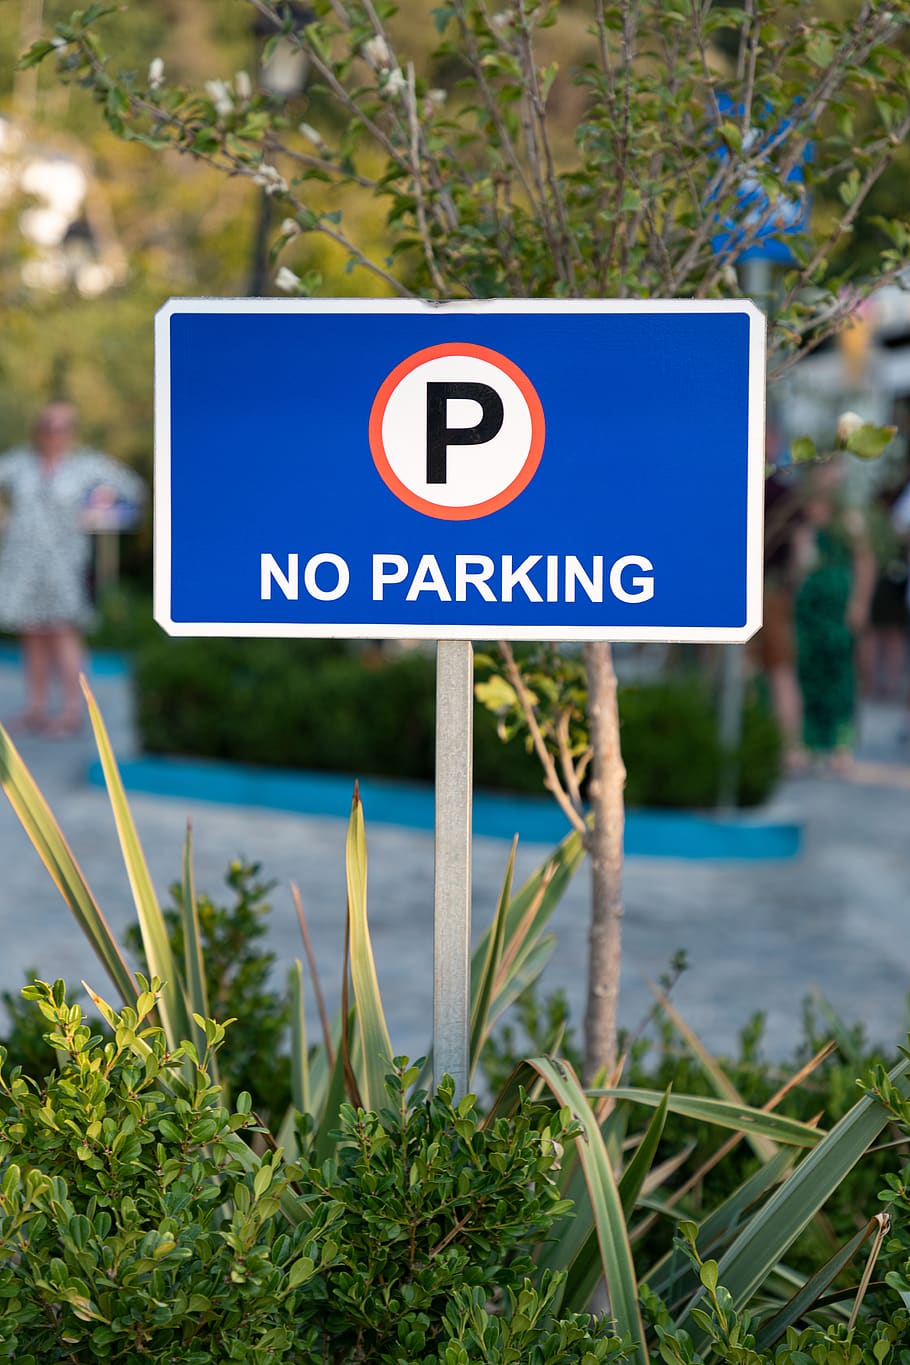 no parking, parking, board, road sign, prohibitory, gebodsbord, indication, warning, alert, sign